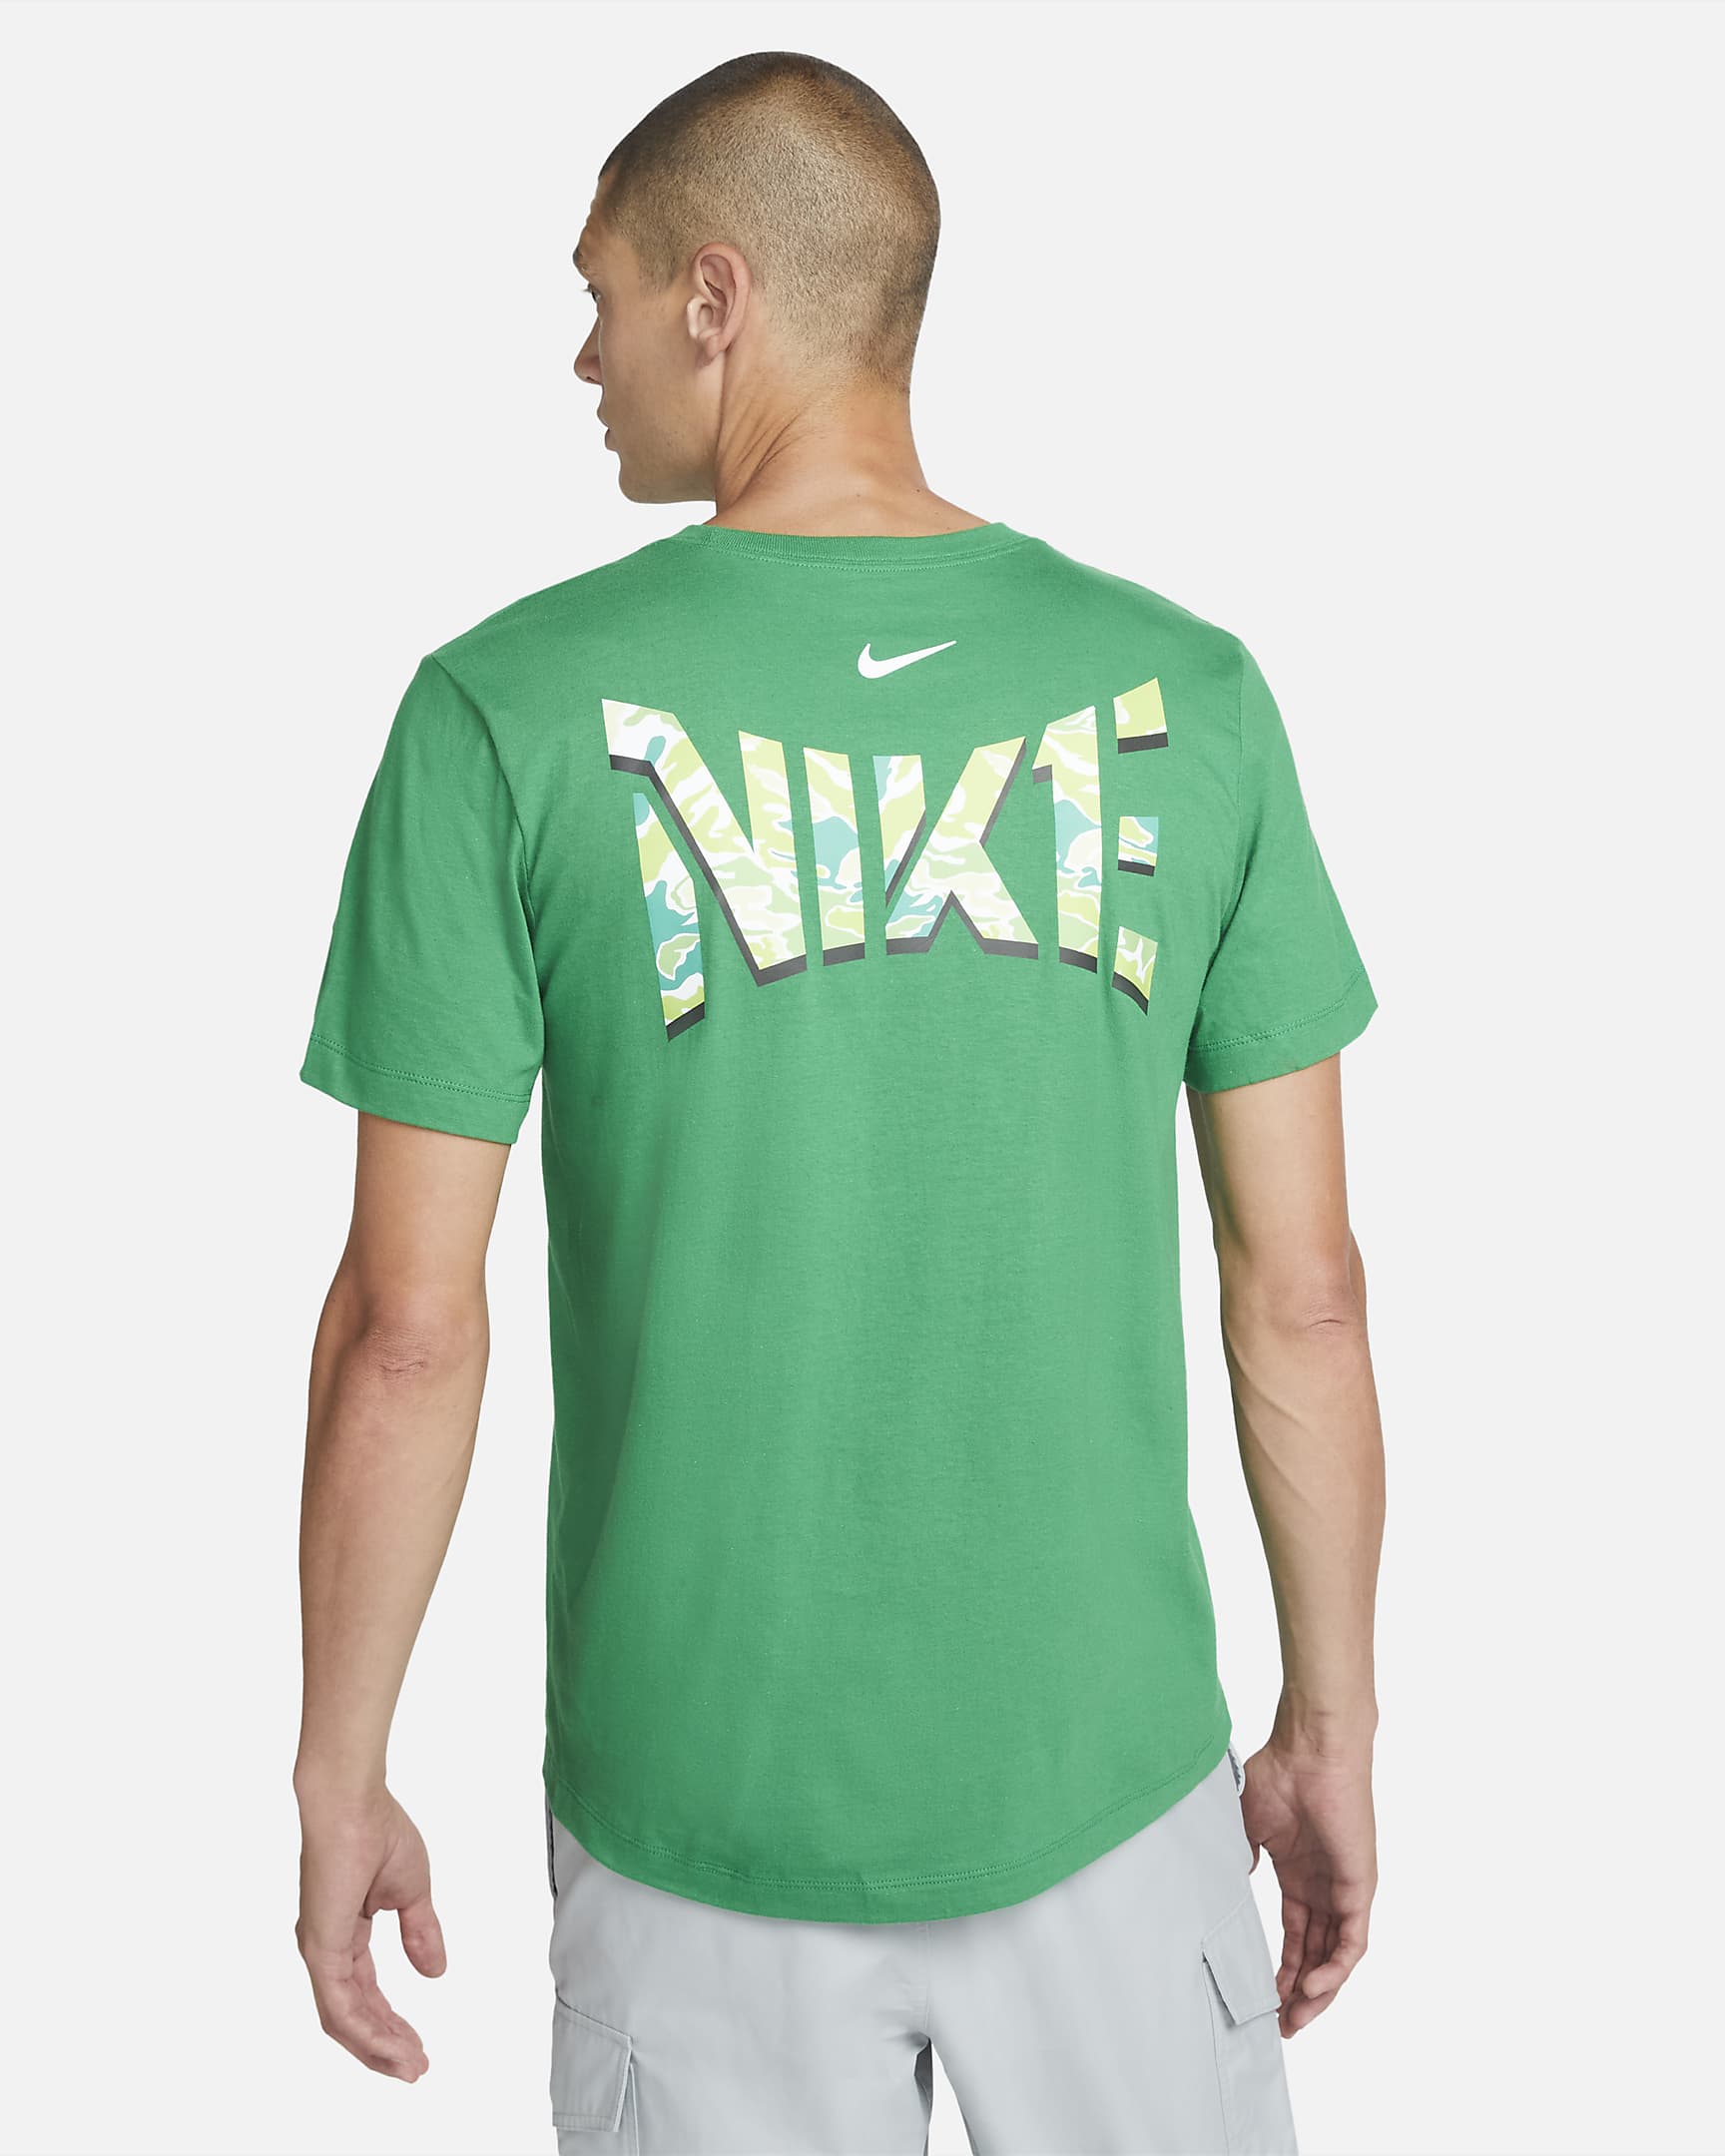 Kyler Murray Men's T-Shirt. Nike.com